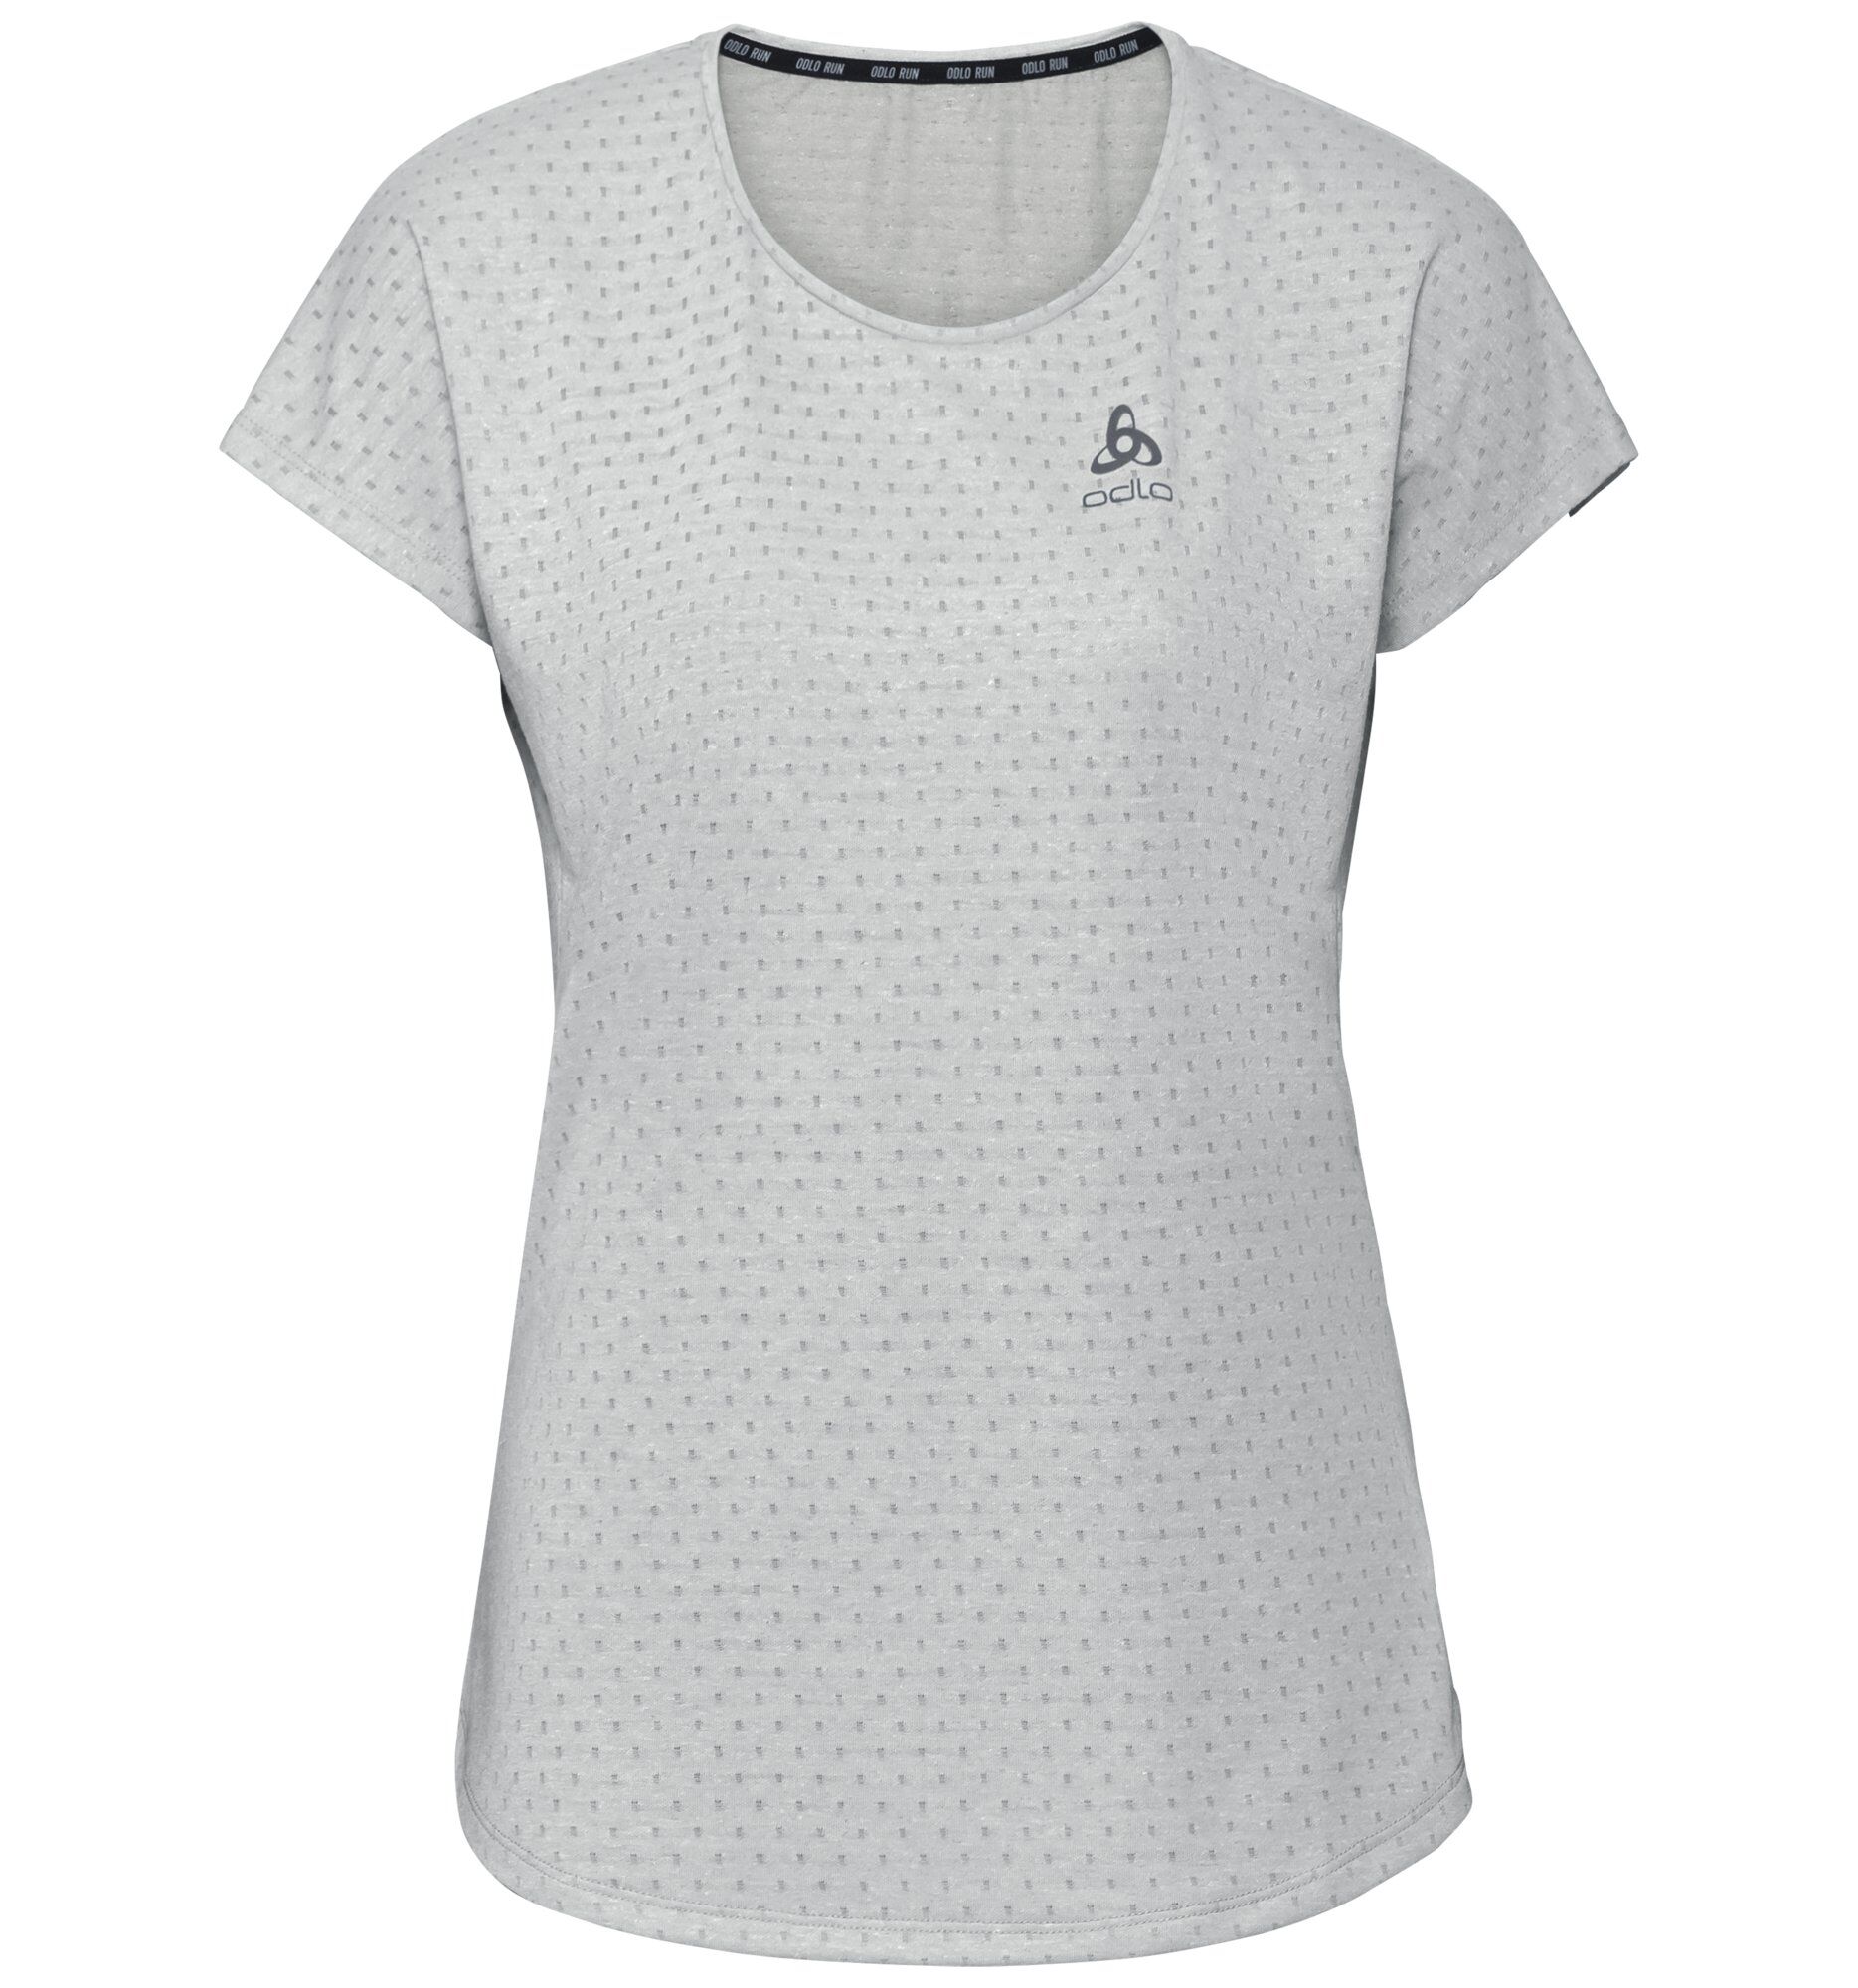 Odlo - Millennium Linencool - T-shirt - Donna